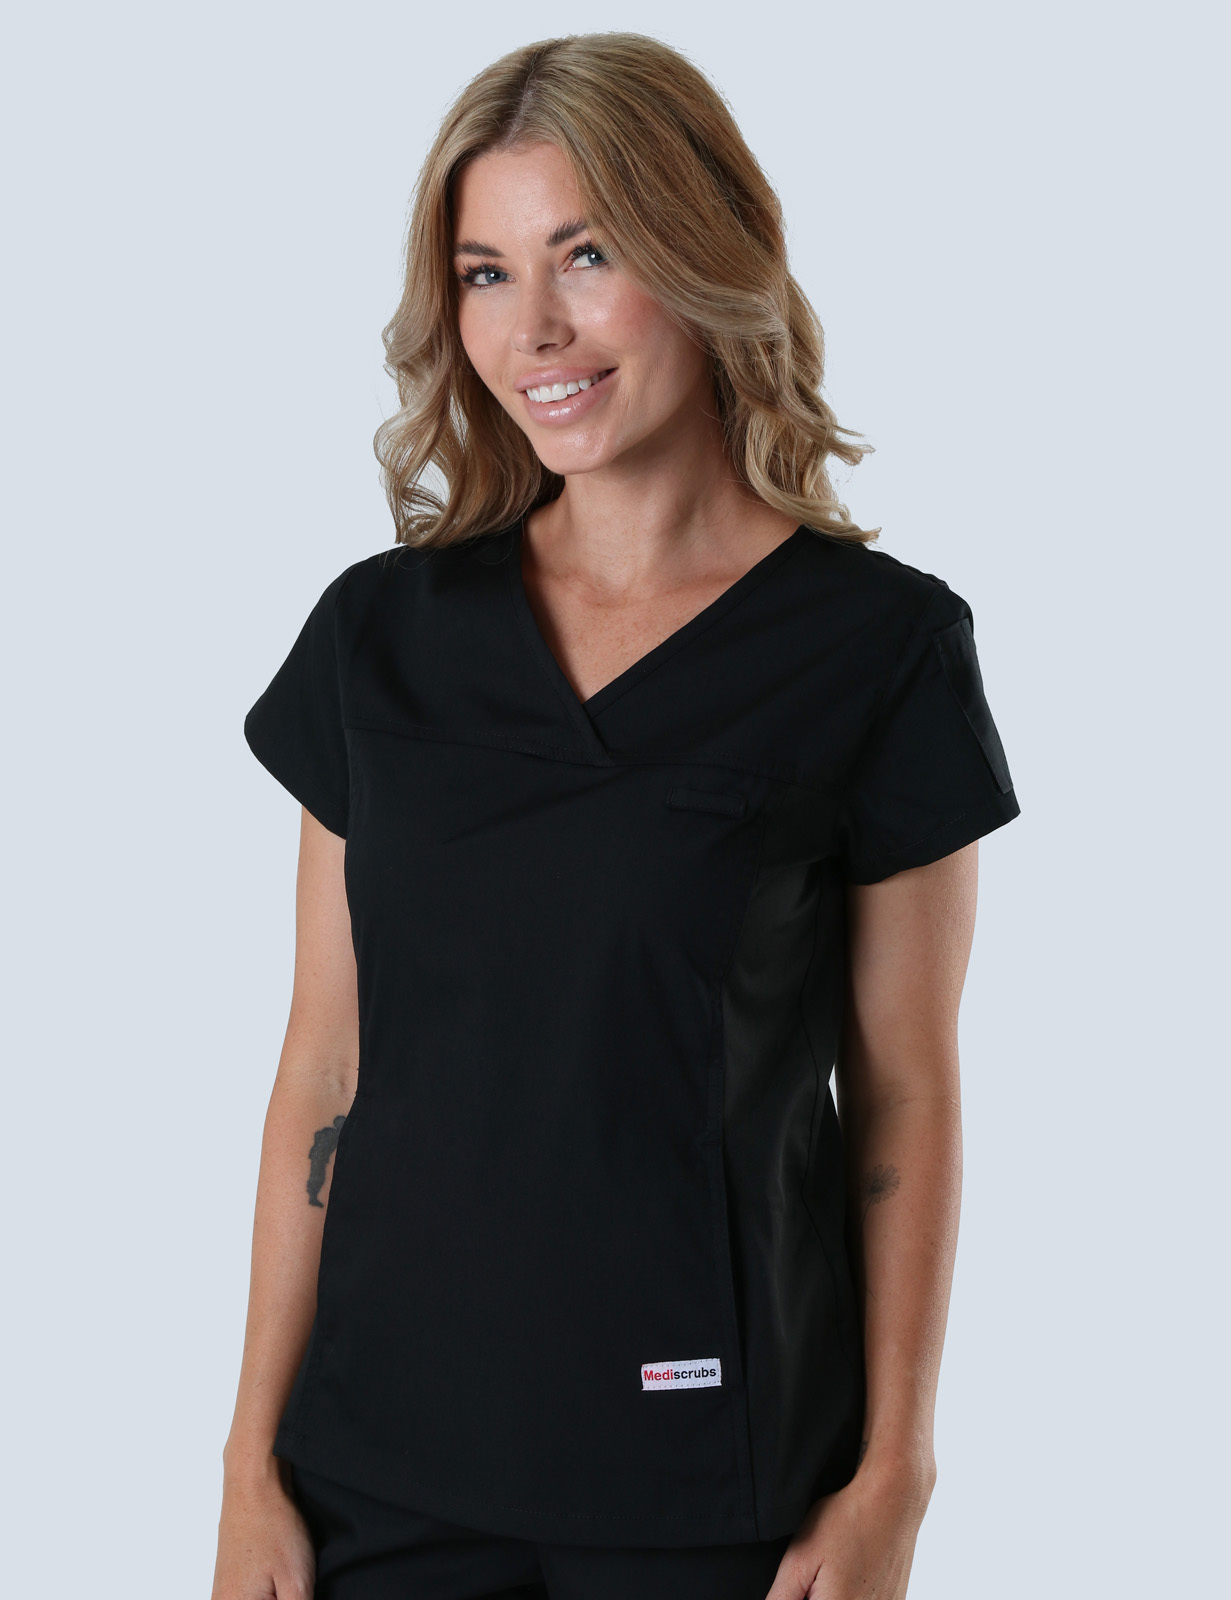 Logan Hospital - Medical Imaging Nurse (Women's Fit Spandex Scrub Top and Cargo Pants in Black incl Logos)